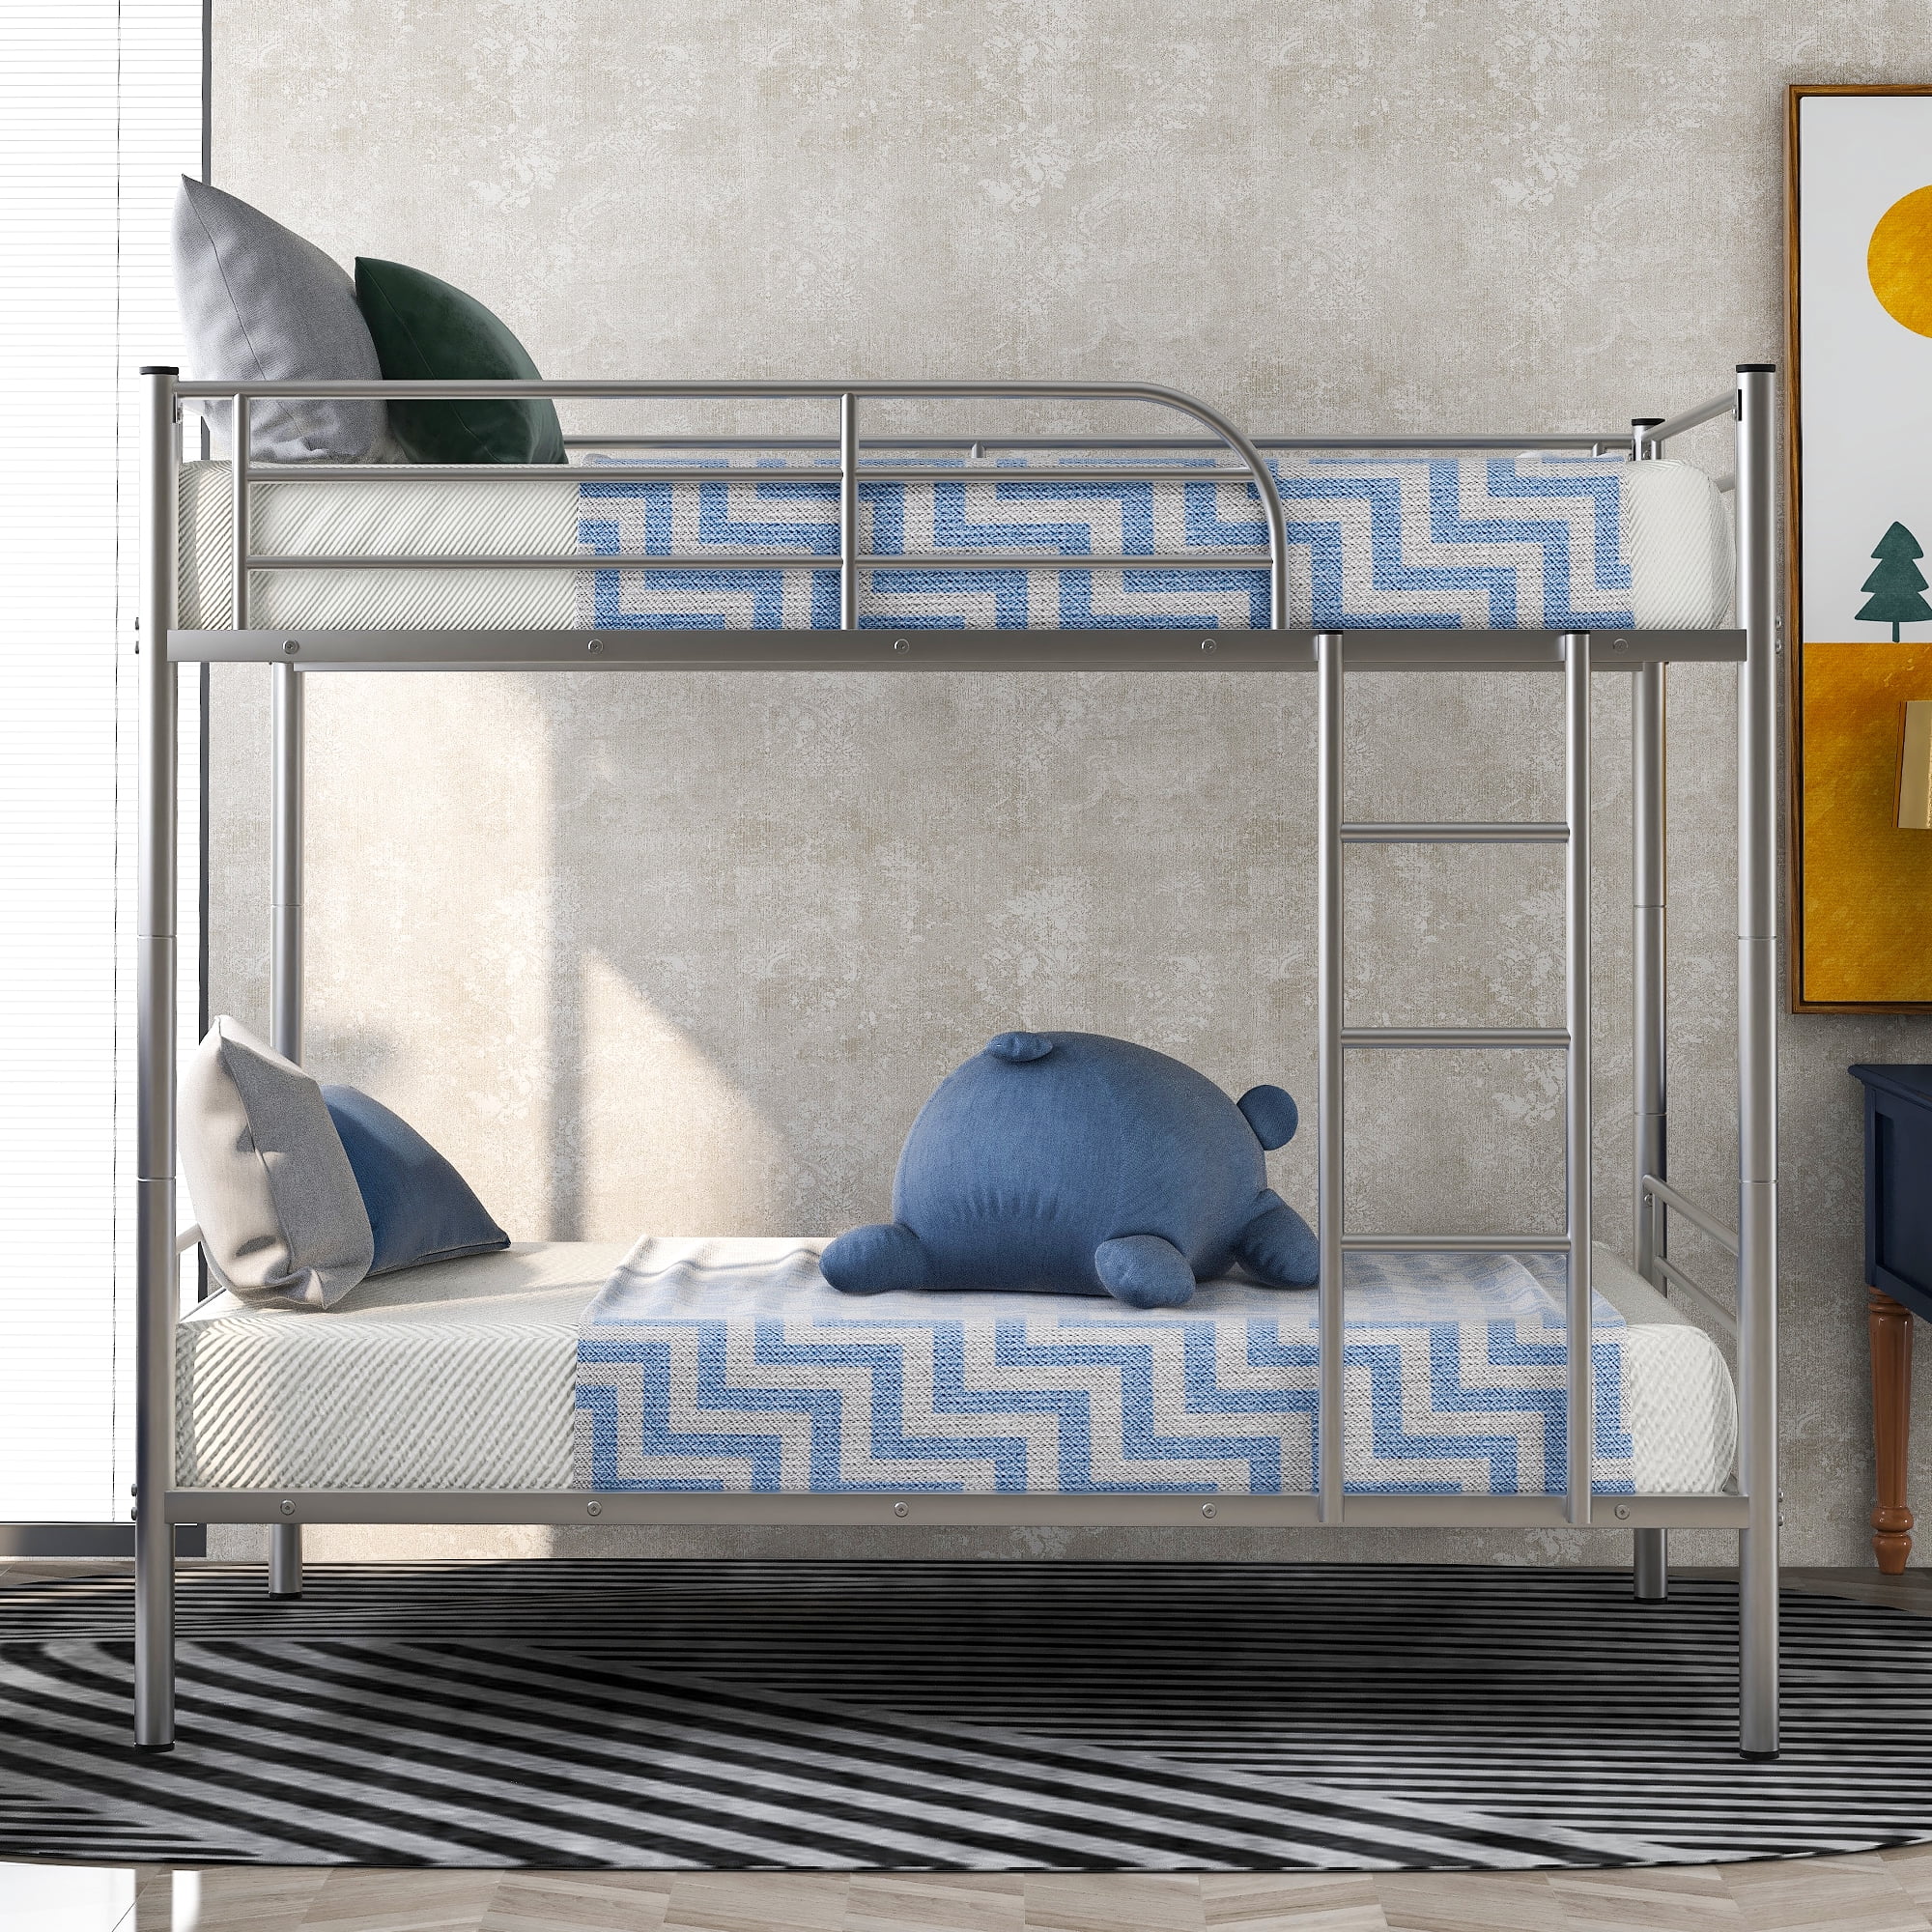 Details about   Twin Loft Bunk Bed Metal Frame Two-Side Ladder Beds Teens Kids Bedroom Full Size 